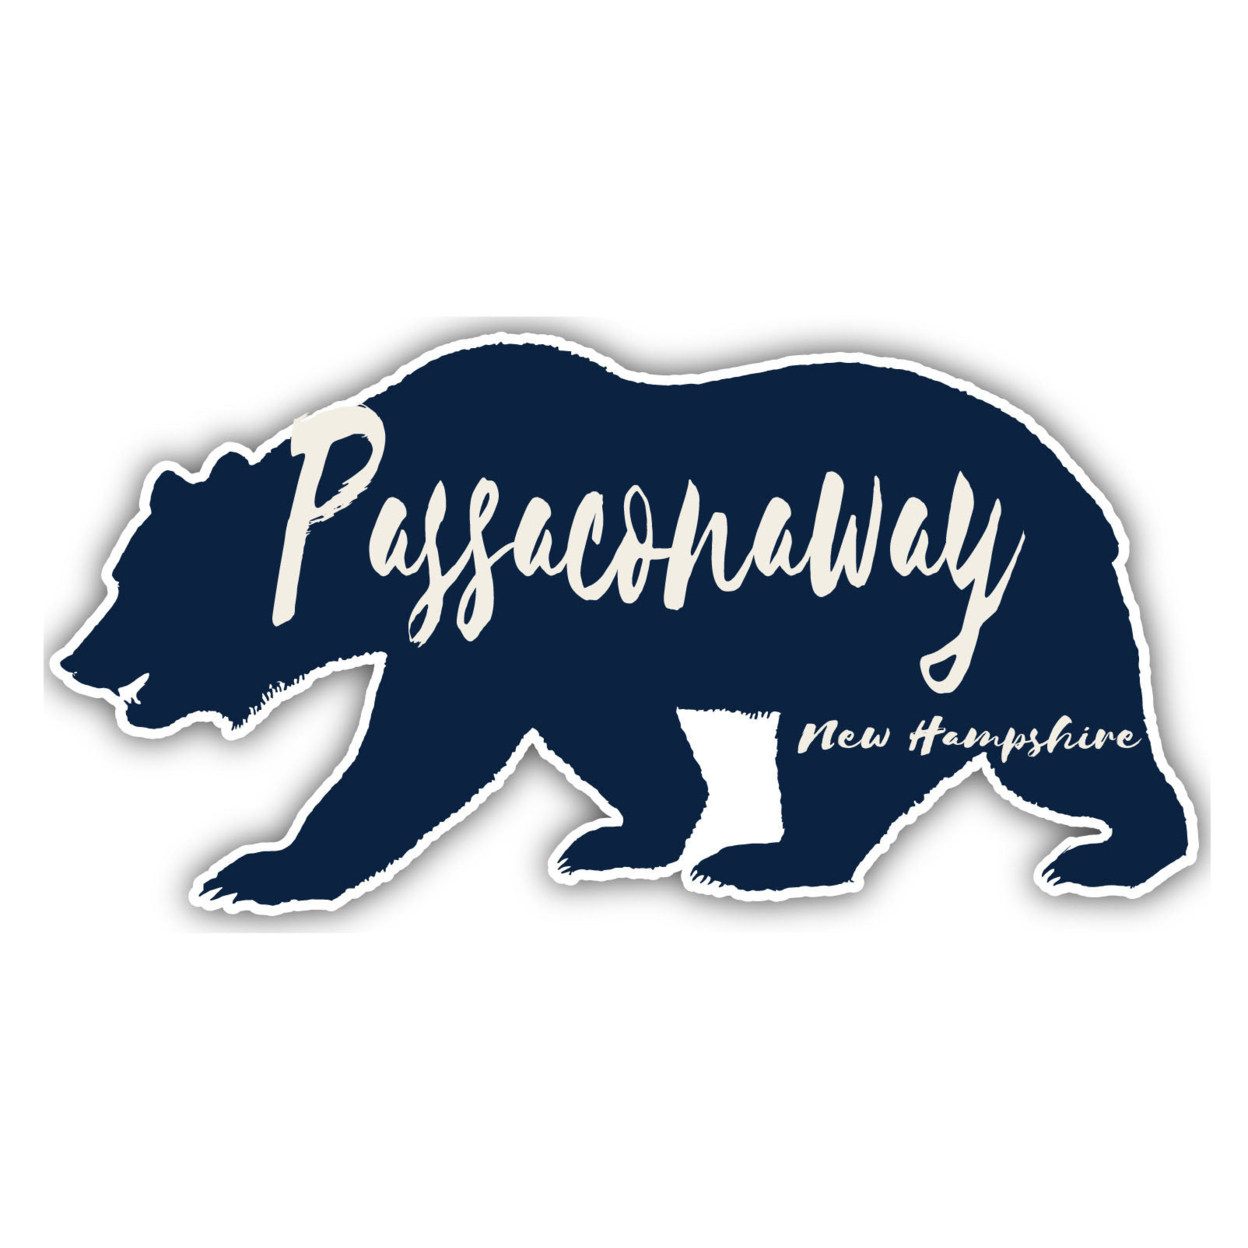 Passaconaway New Hampshire Souvenir Decorative Stickers (Choose Theme And Size) - Single Unit, 4-Inch, Bear